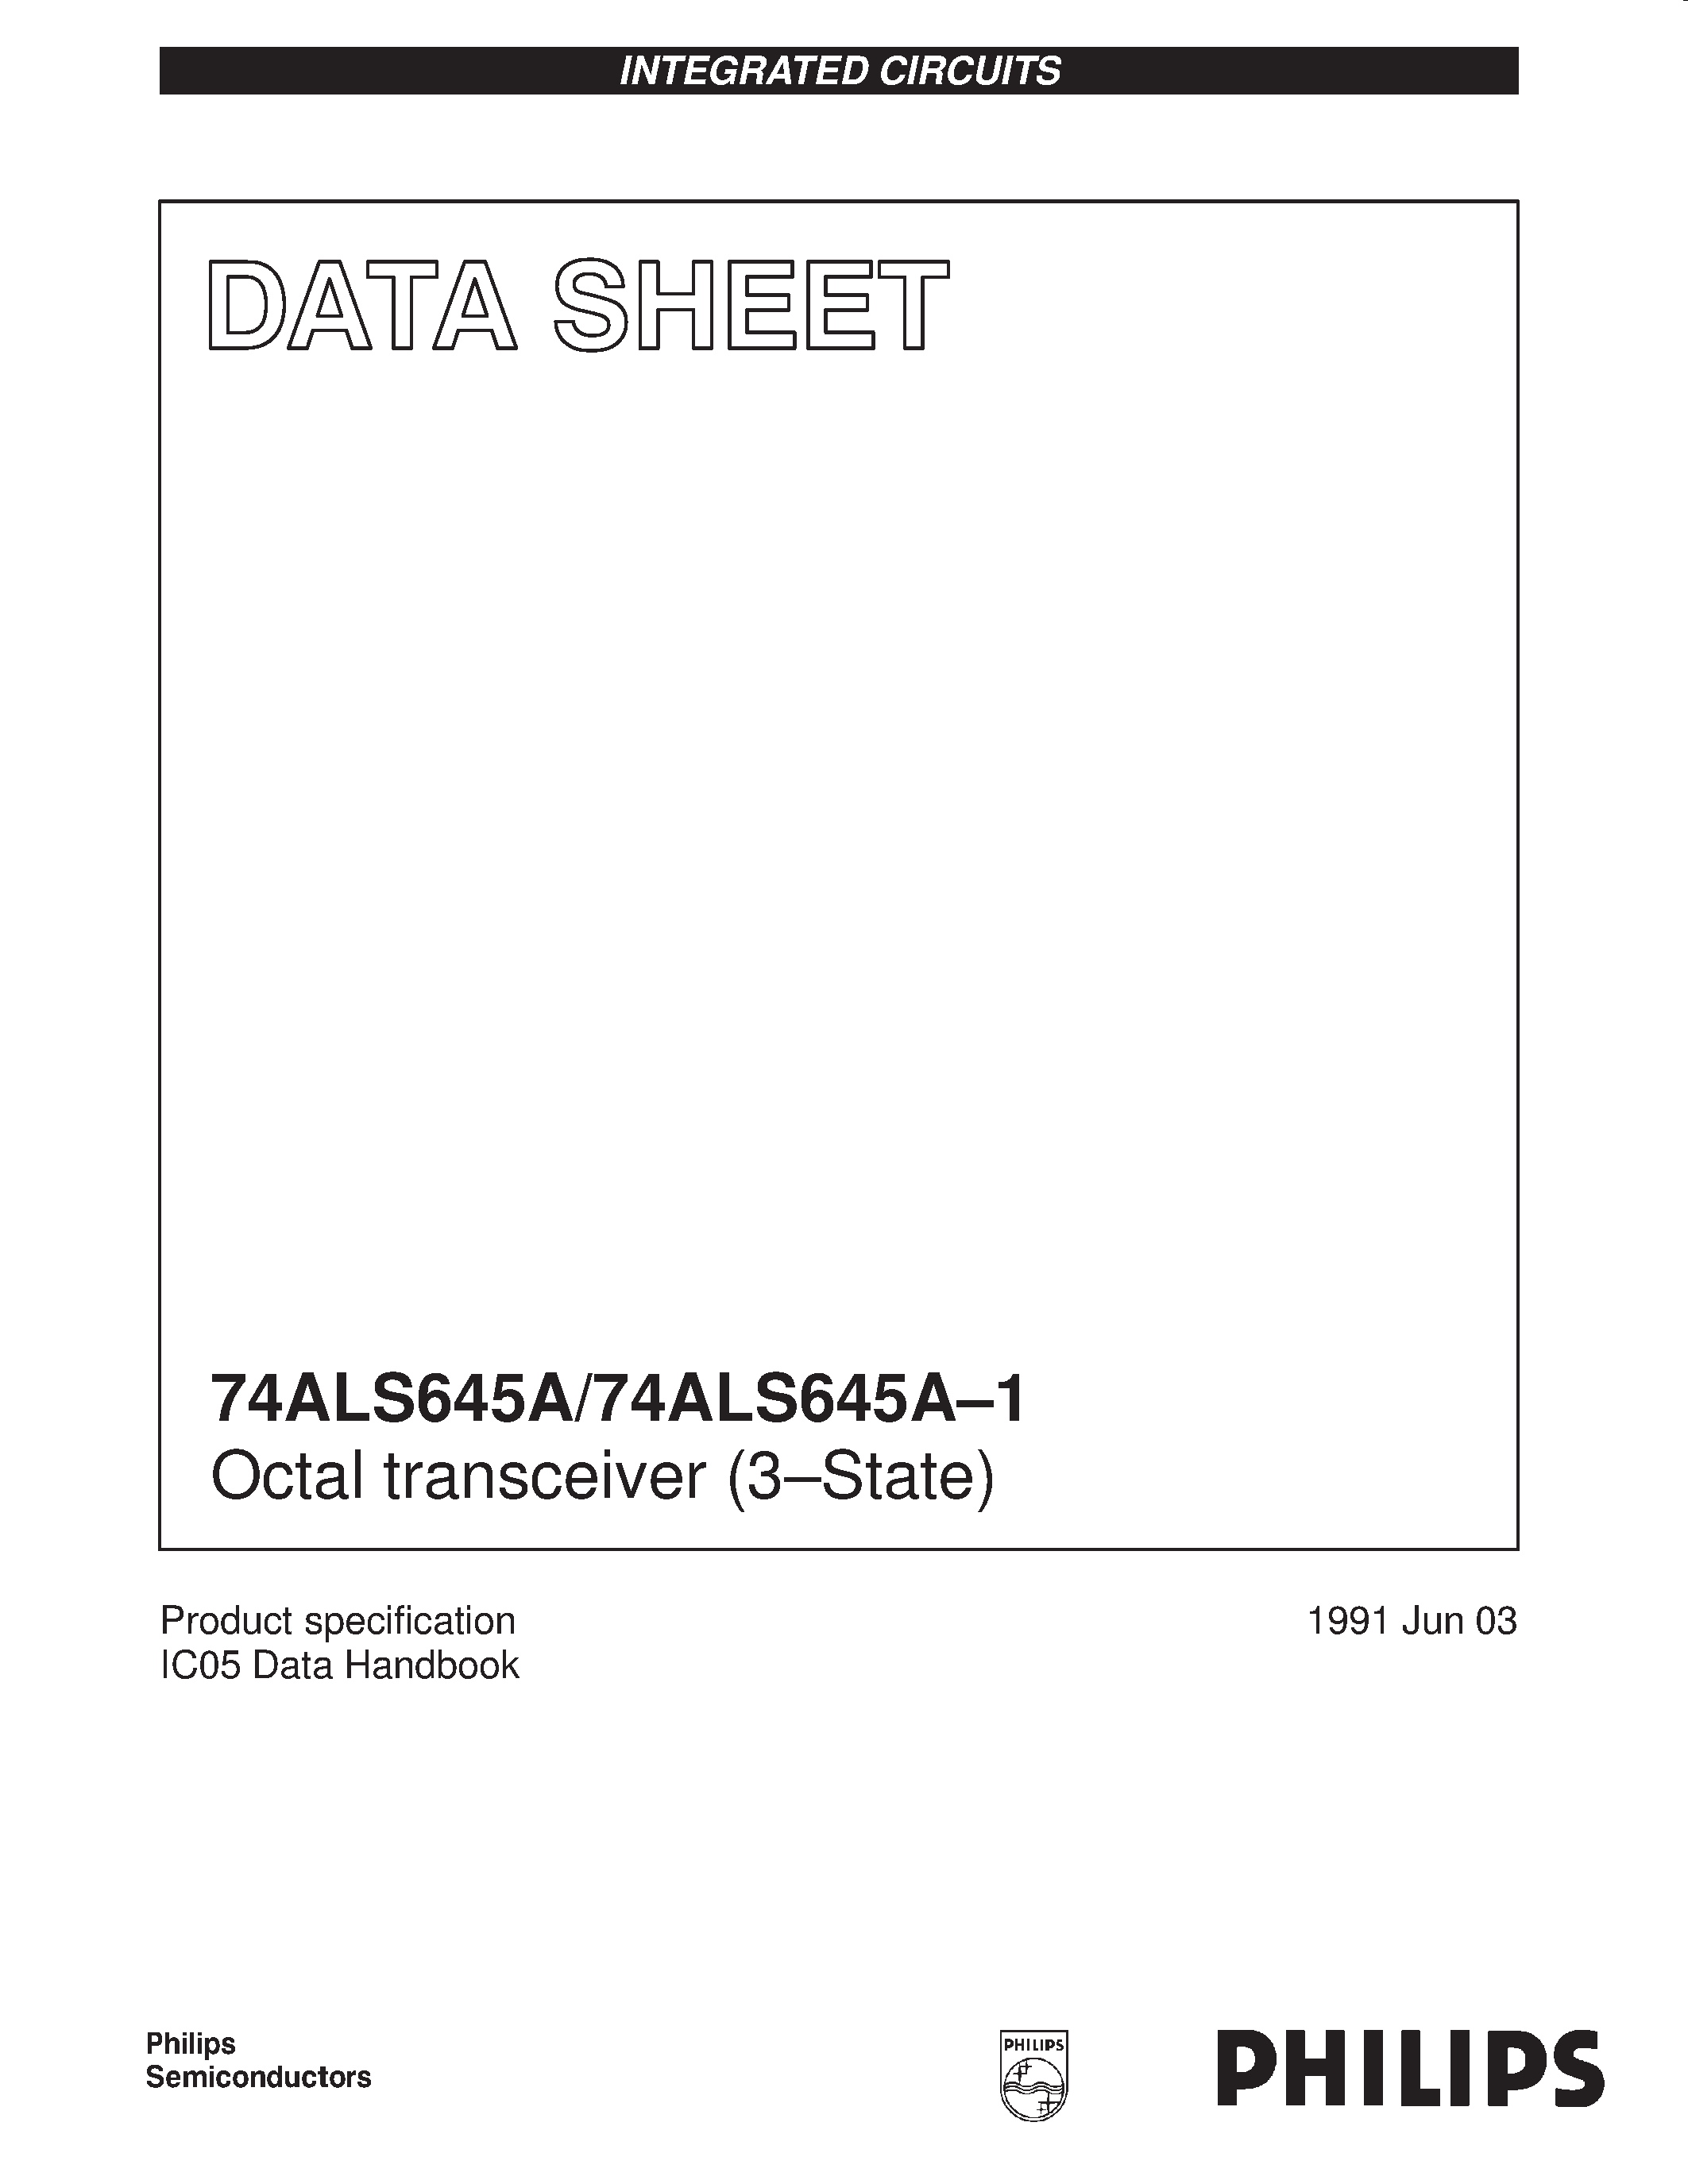 Даташит 744ALS645A-1D - Octal transceiver 3-State страница 1